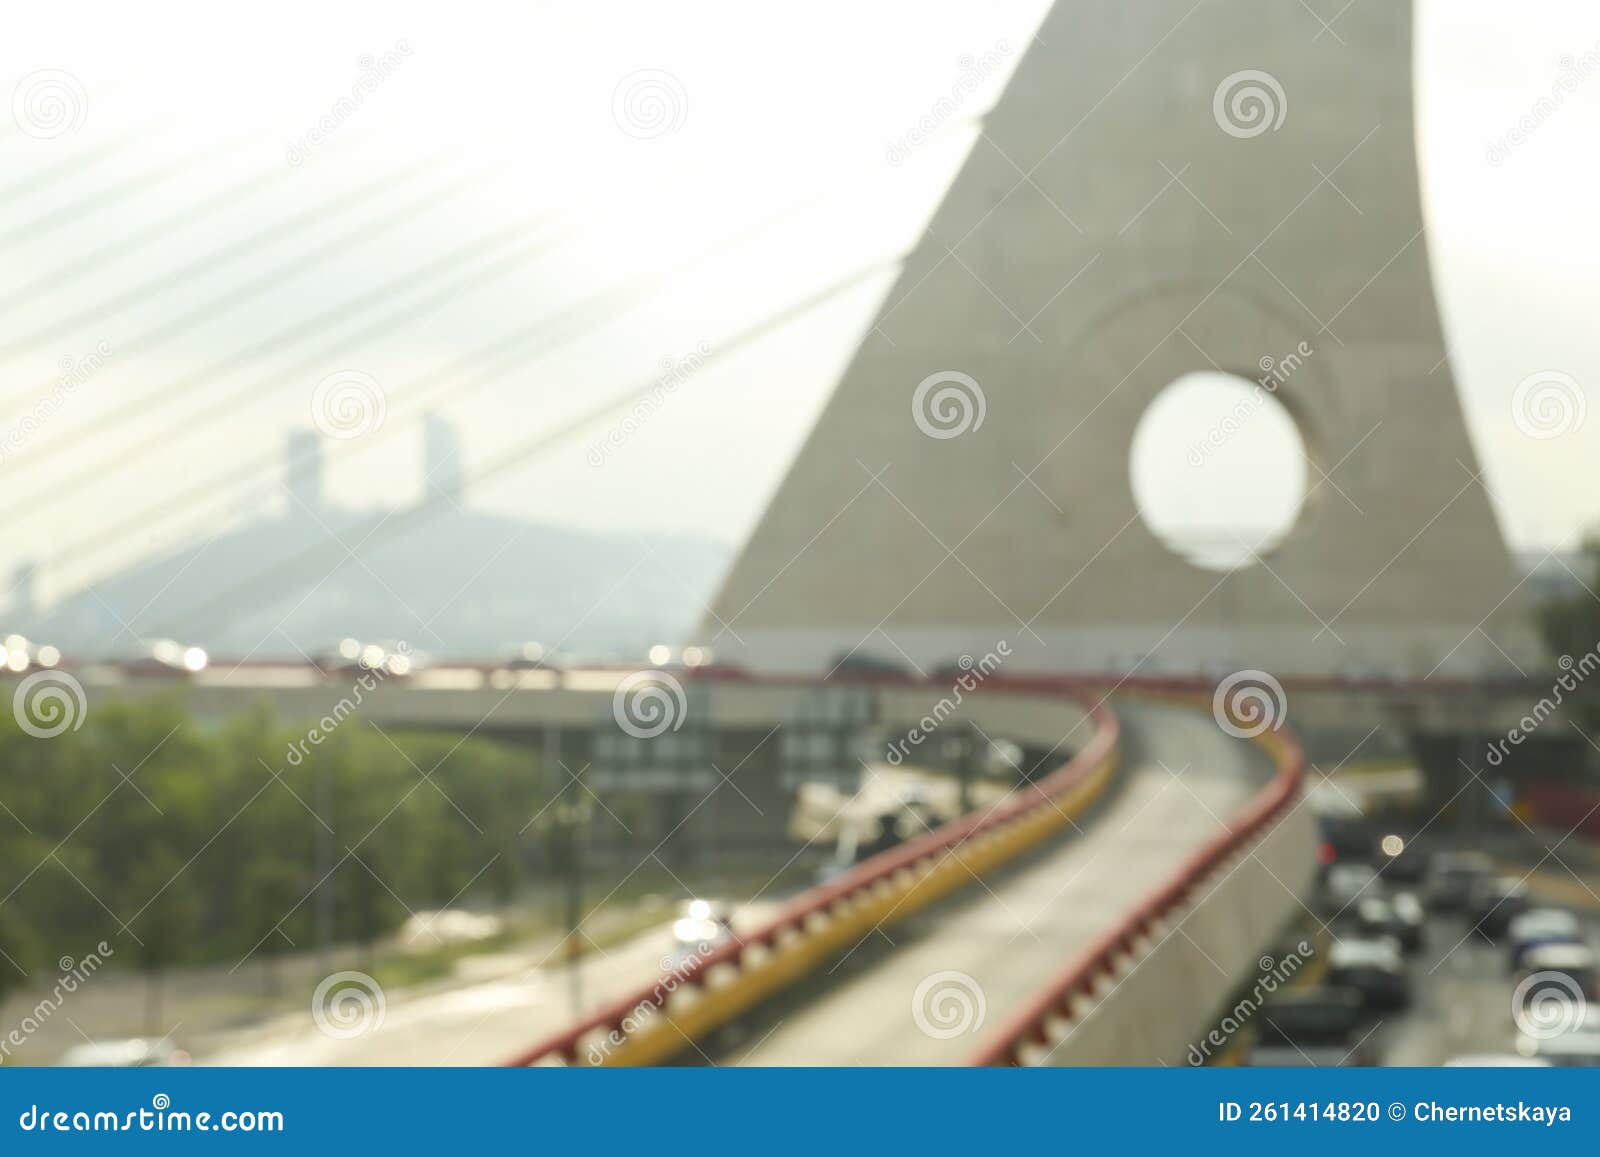 blurred view of cars on modern bridge